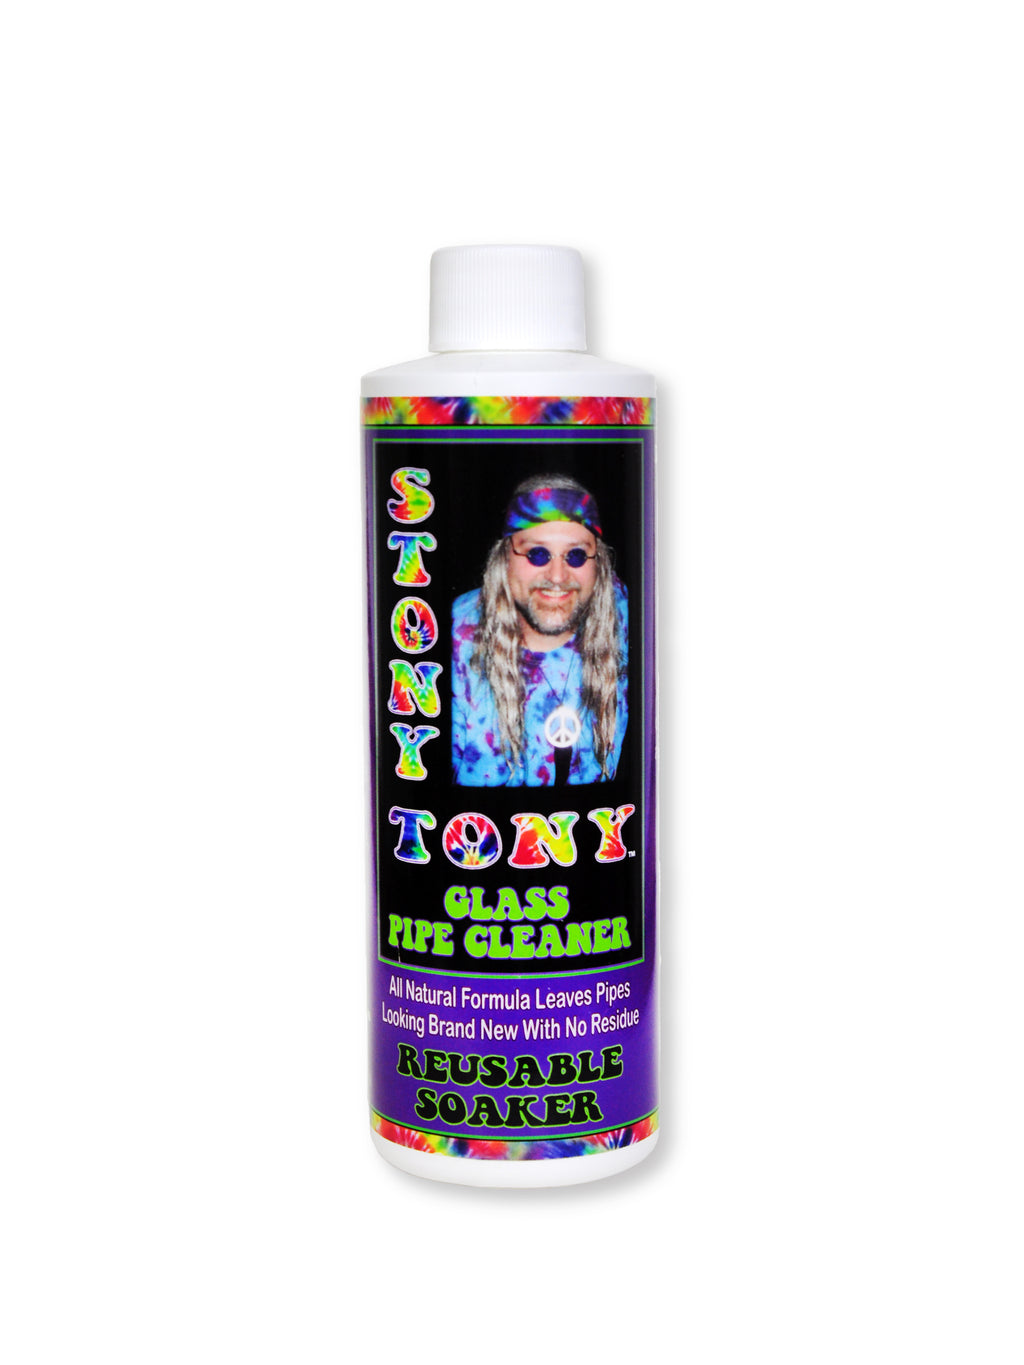 Stony Tony Glass Pipe Cleaner 8oz